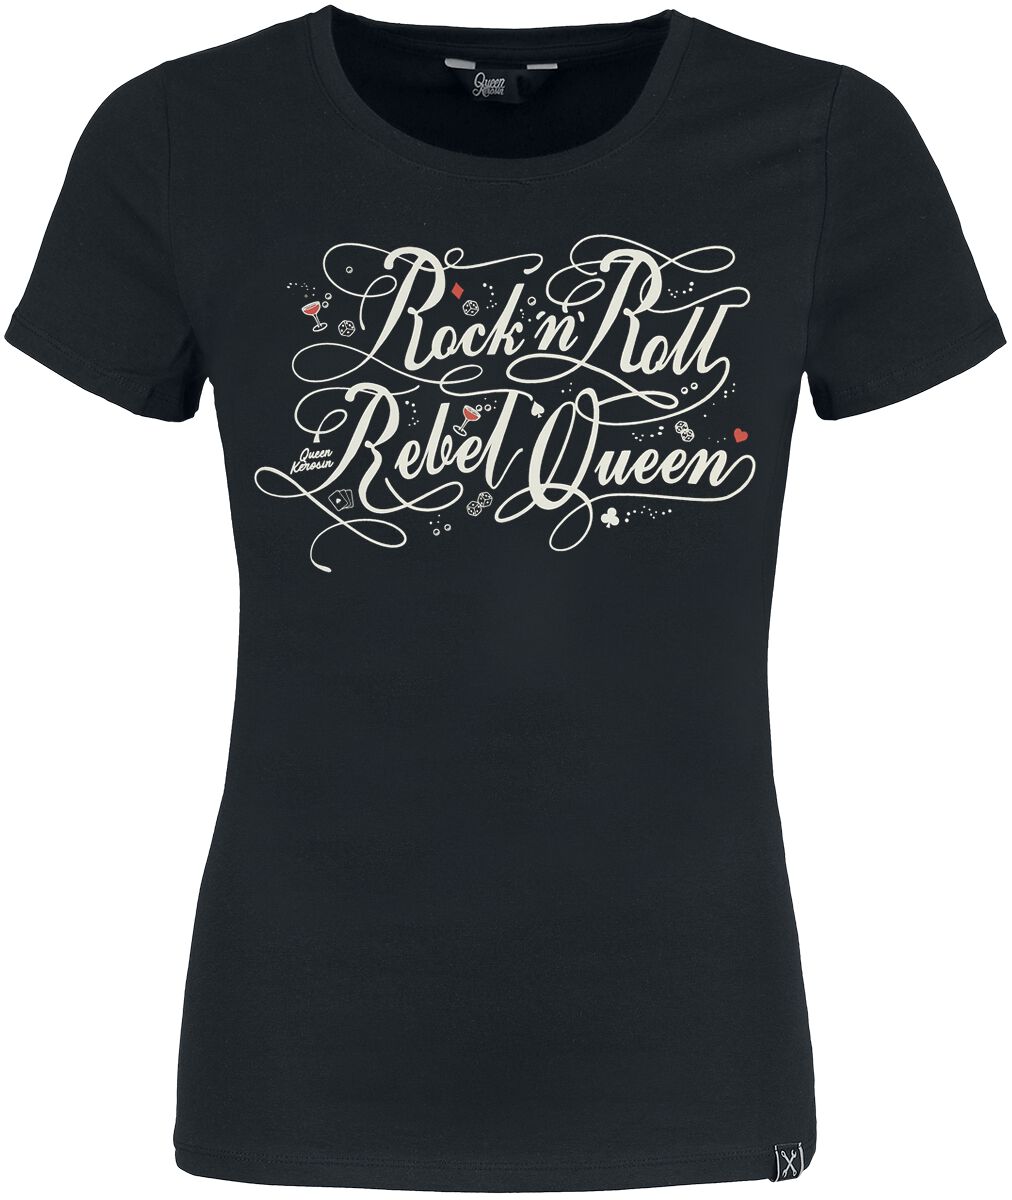 T-Shirt Manches courtes Rockabilly de Queen Kerosin - Rock'n Roll Queen - XS à XXL - pour Femme - no